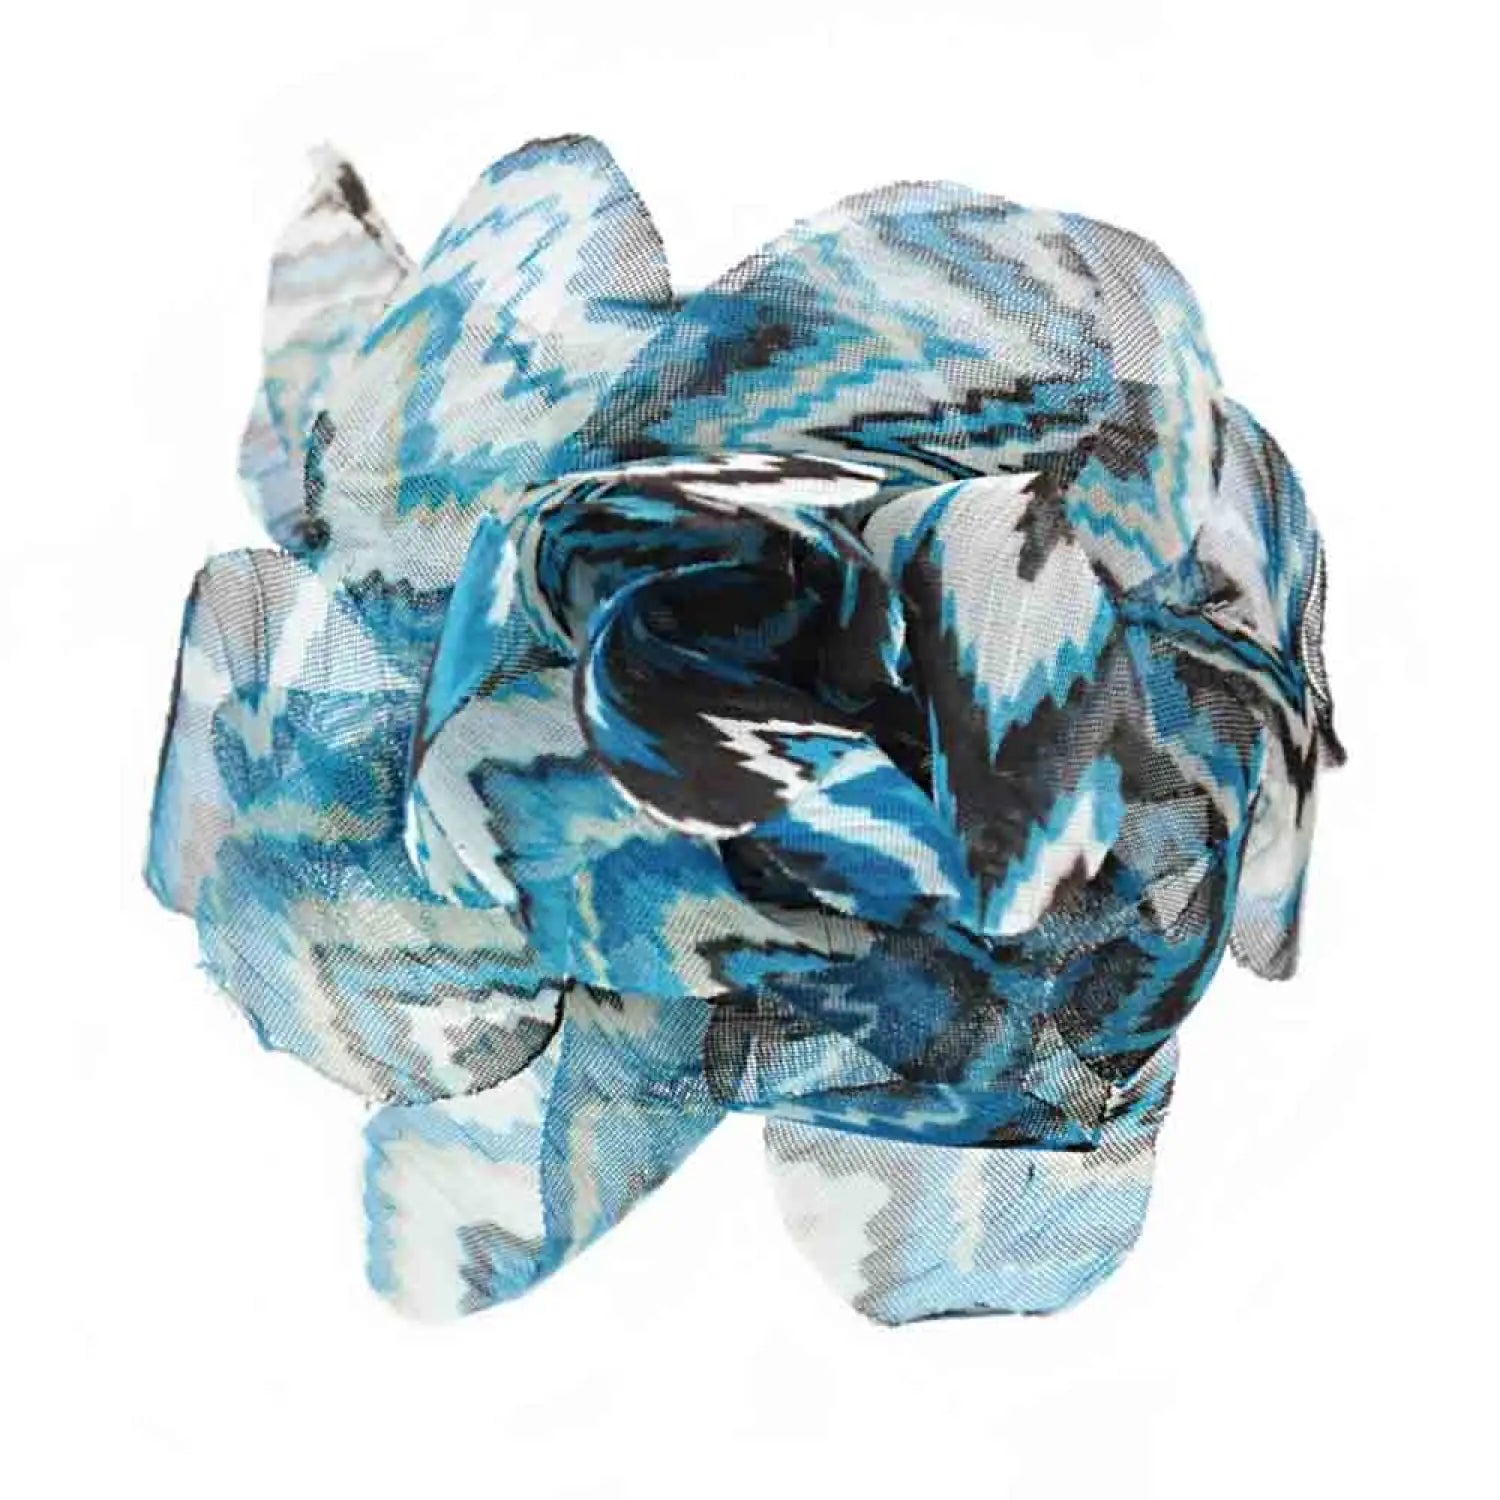 Blue and white Missoni print flower hair clip on white background